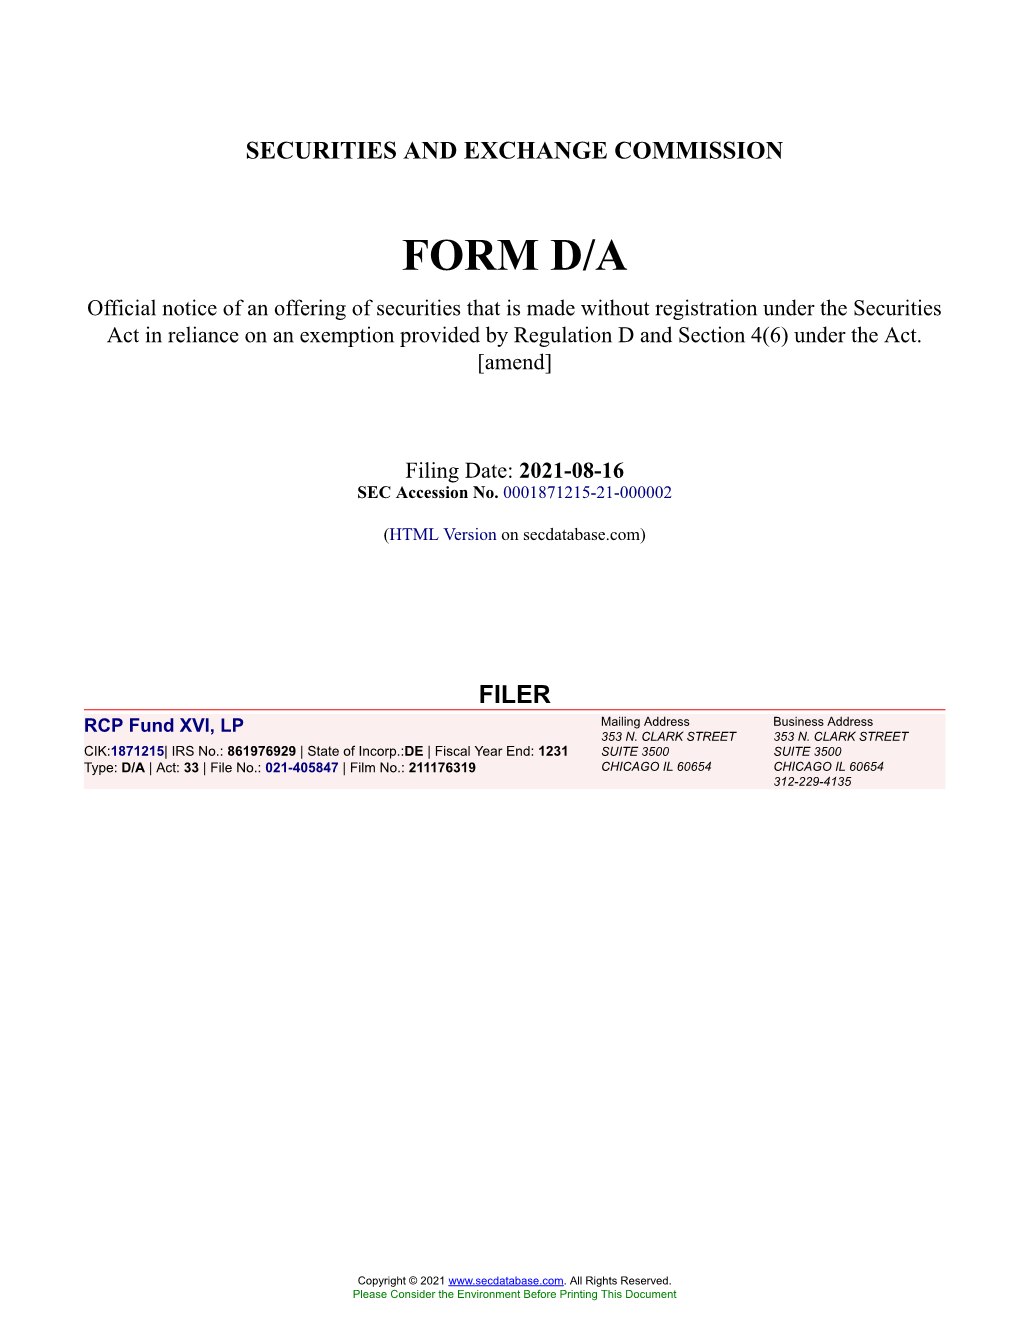 RCP Fund XVI, LP Form D/A Filed 2021-08-16